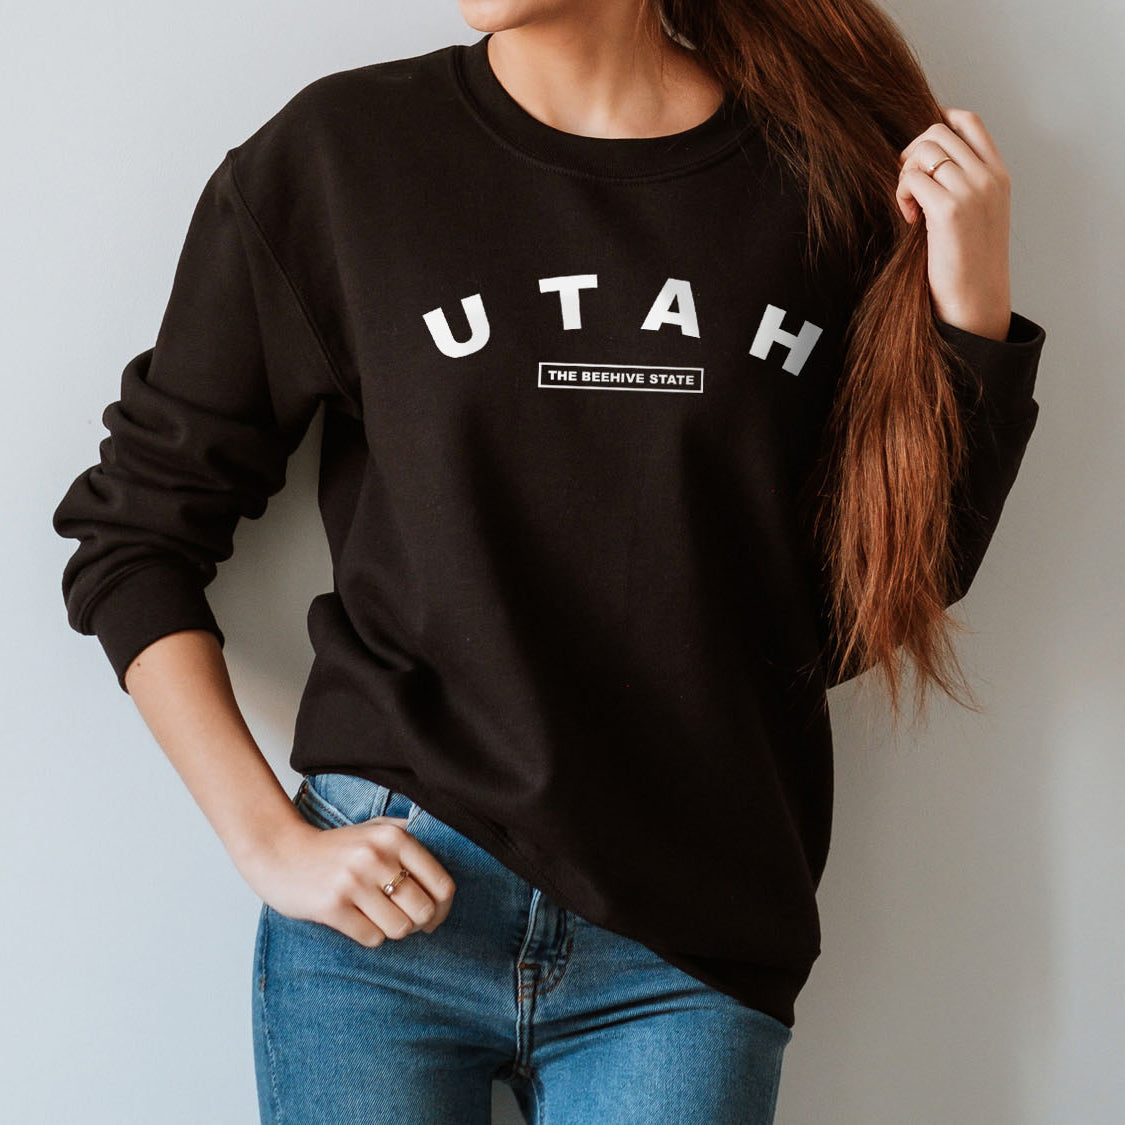 Utah The Beehive State Sweatshirt - United States Name & Slogan Minimal Design Printed Sweatshirt